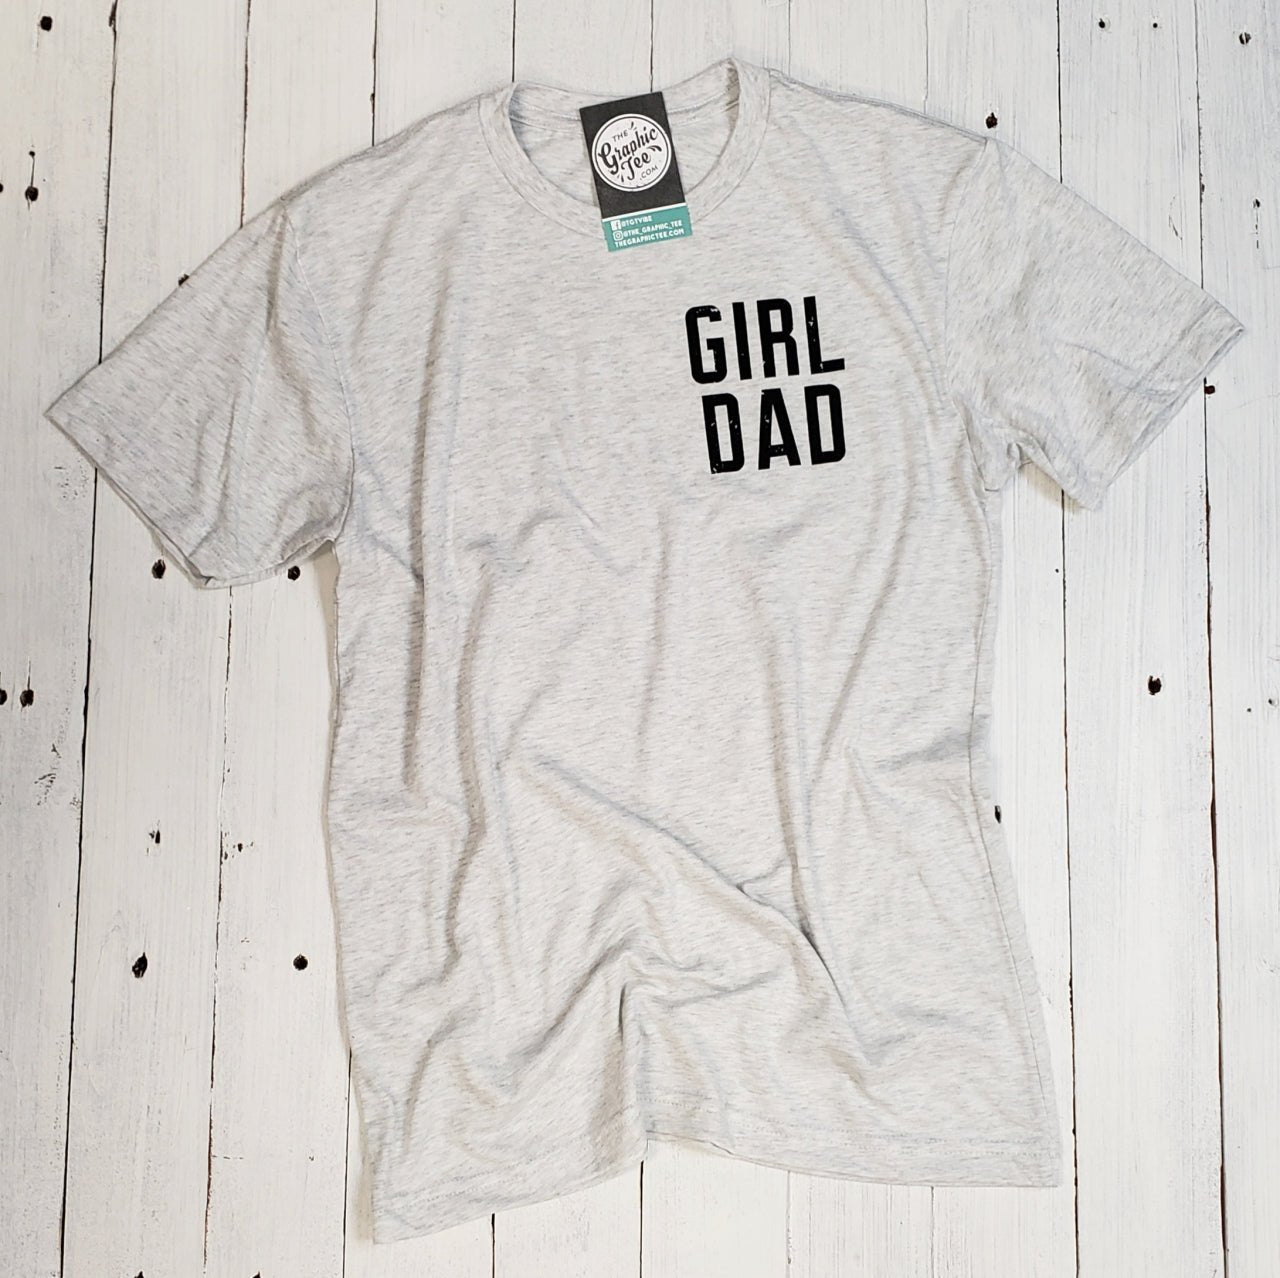 Girl Dad Short Sleeve Tee - The Graphic Tee